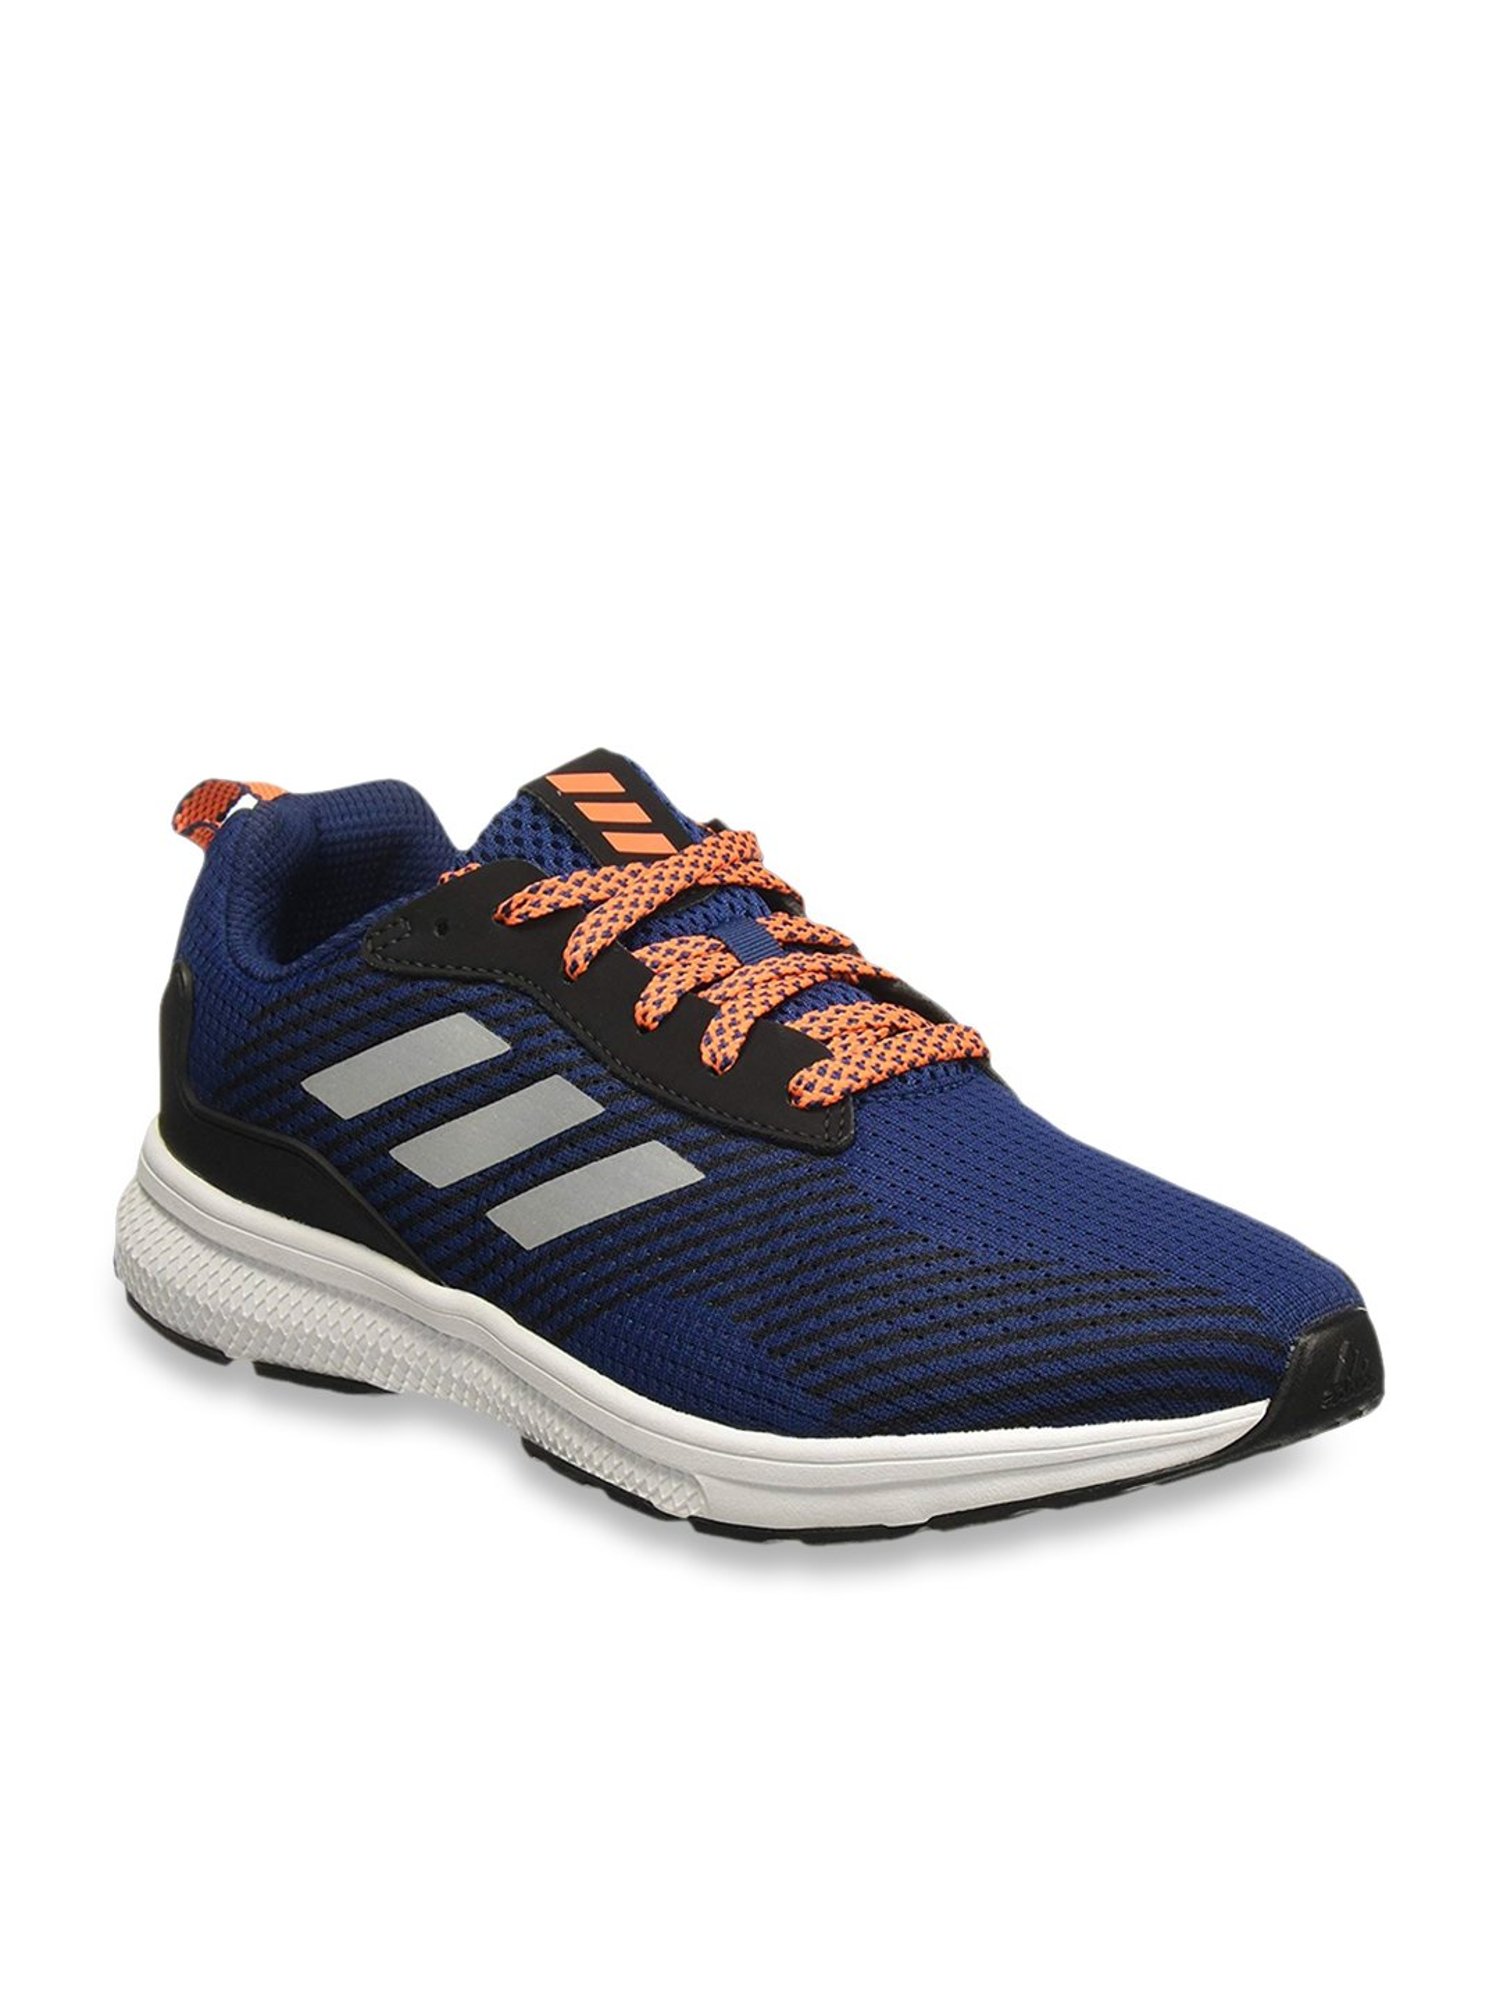 Buy Adidas Kyris 1 Navy Running Shoes 